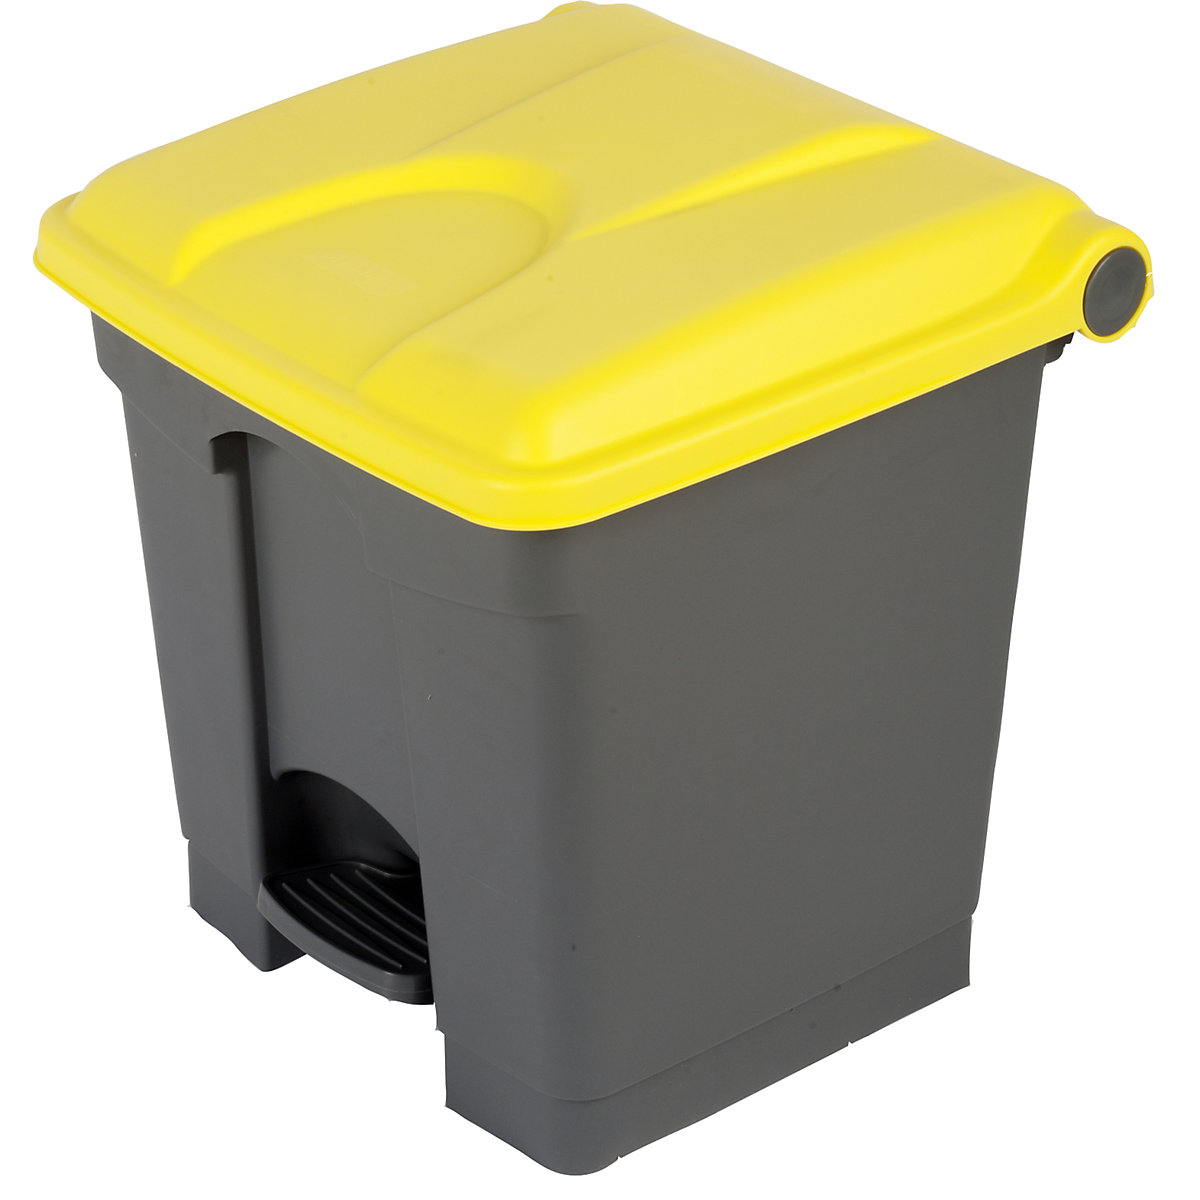 EUROKRAFTbasic – Pedal waste collector, capacity 30 l, WxHxD 410 x 435 x 400 mm, grey, yellow lid